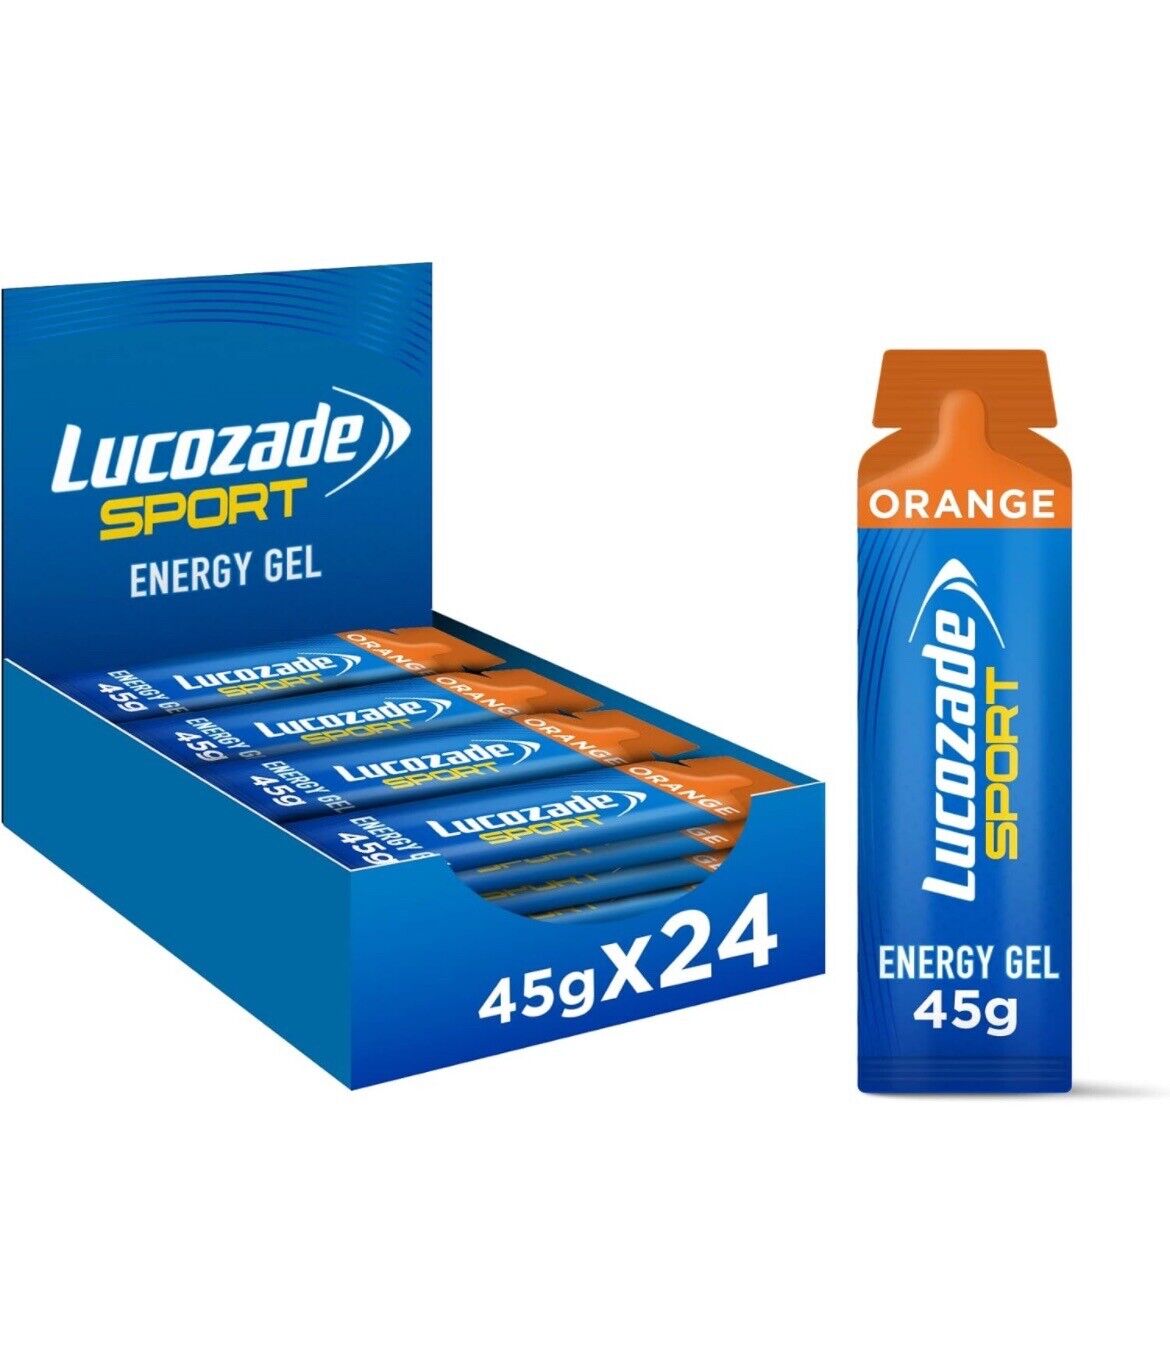 Lucozade Sport Duel-Fuel Energy Gel Orange